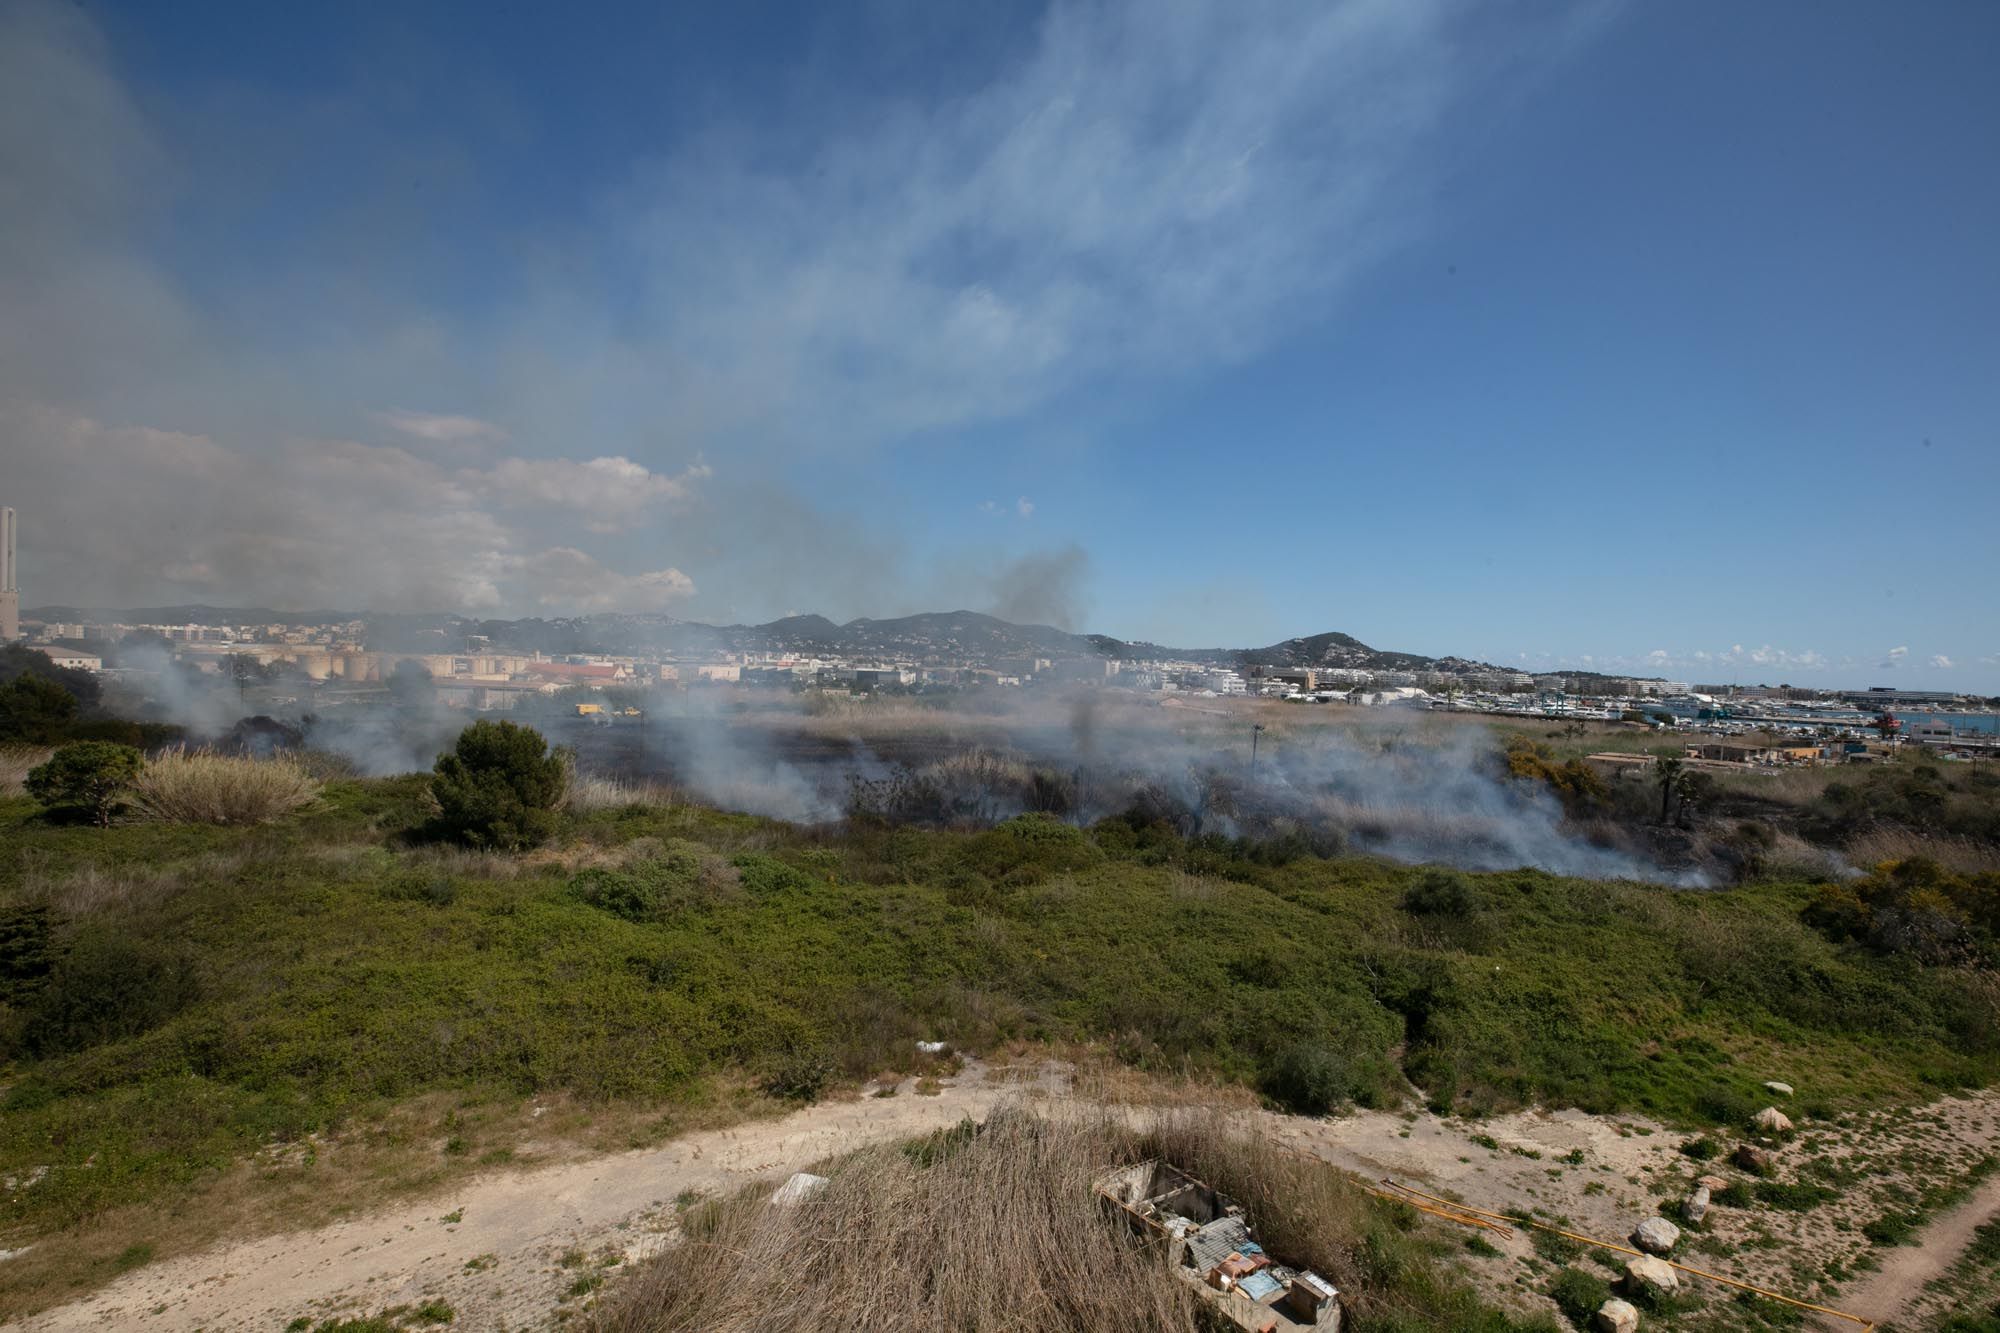 Galería del incendio de ses Feixes en Ibiza